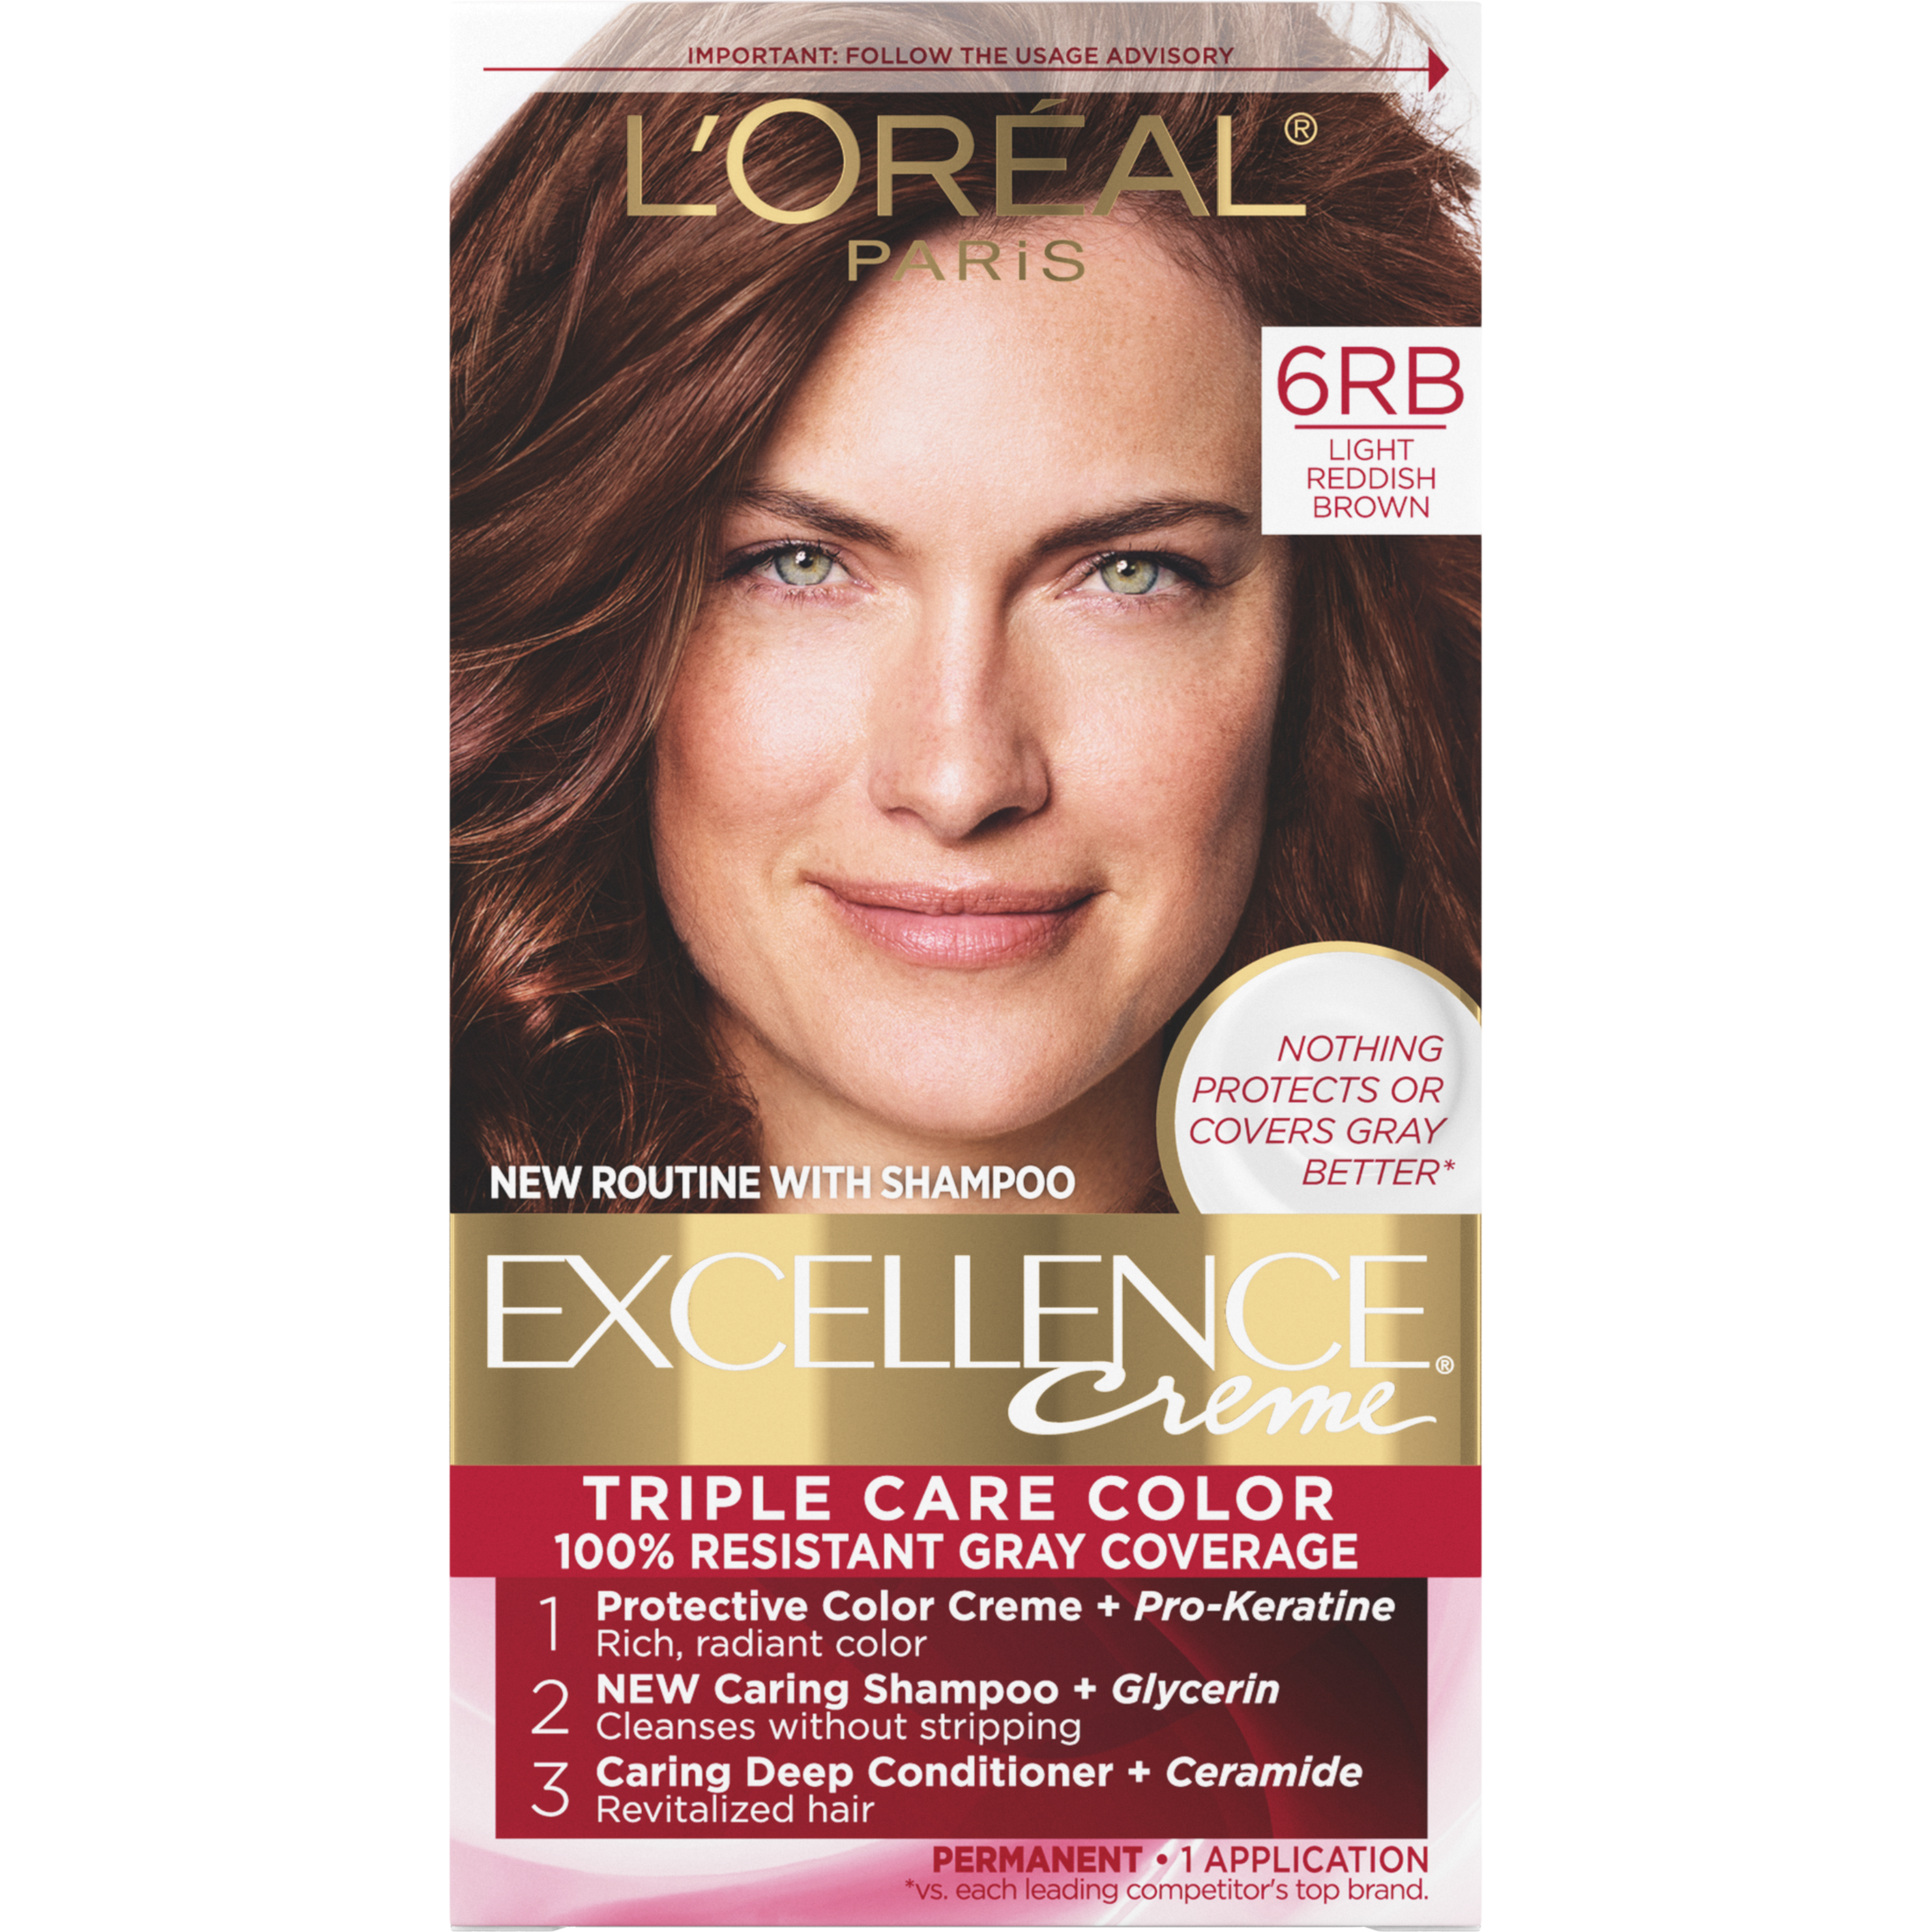 L'Oreal Paris Excellence Creme Permanent Hair Color, 6RB Light Reddish Brown - image 1 of 8